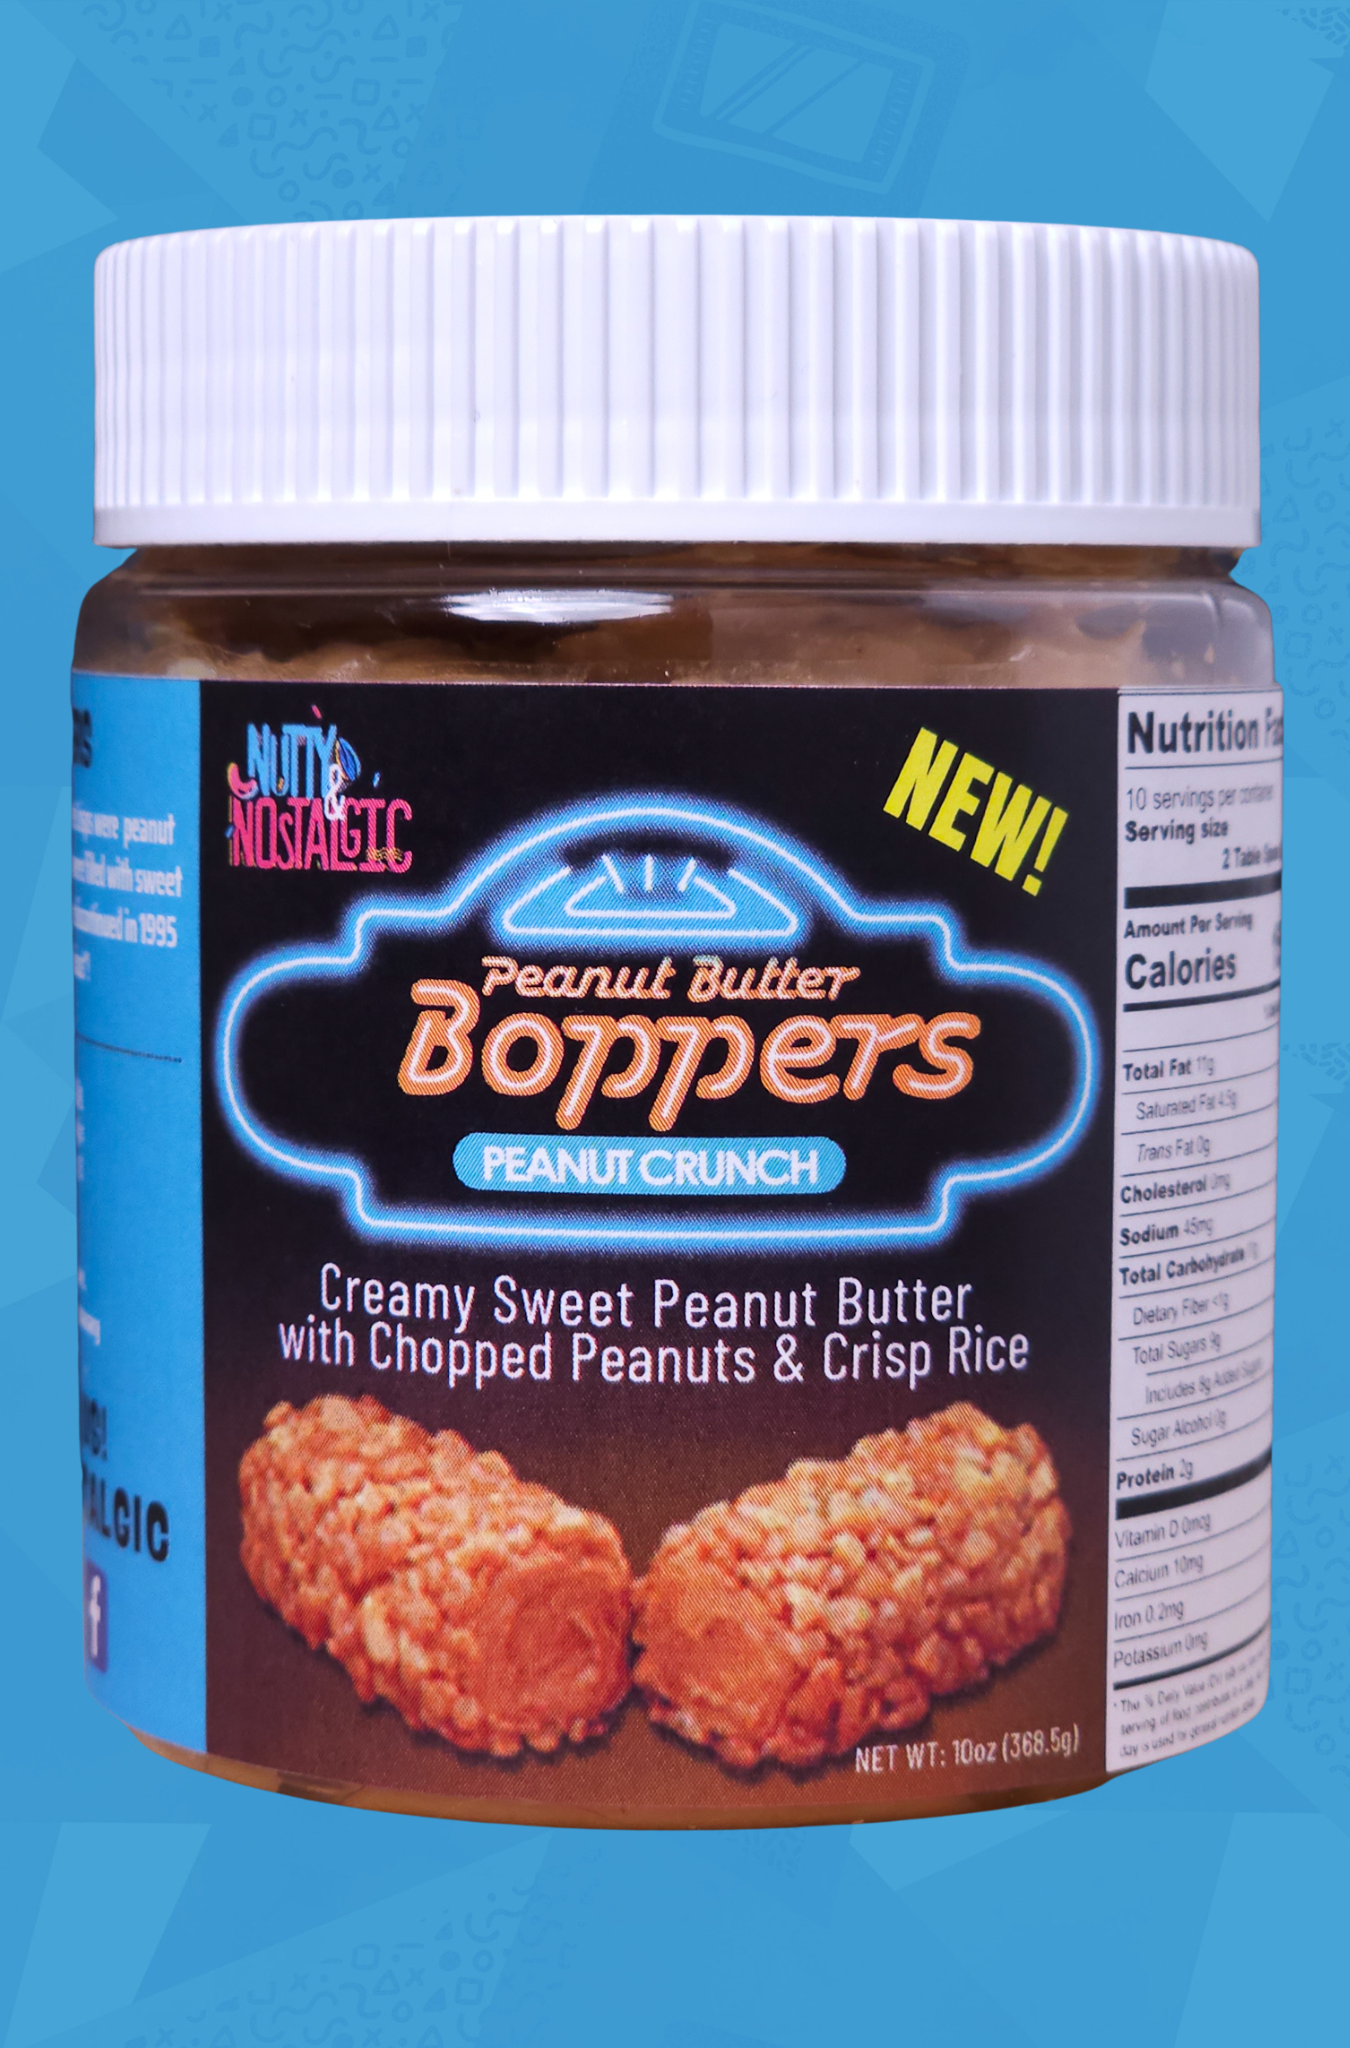 PB BOPPERS (Peanut Crunch)